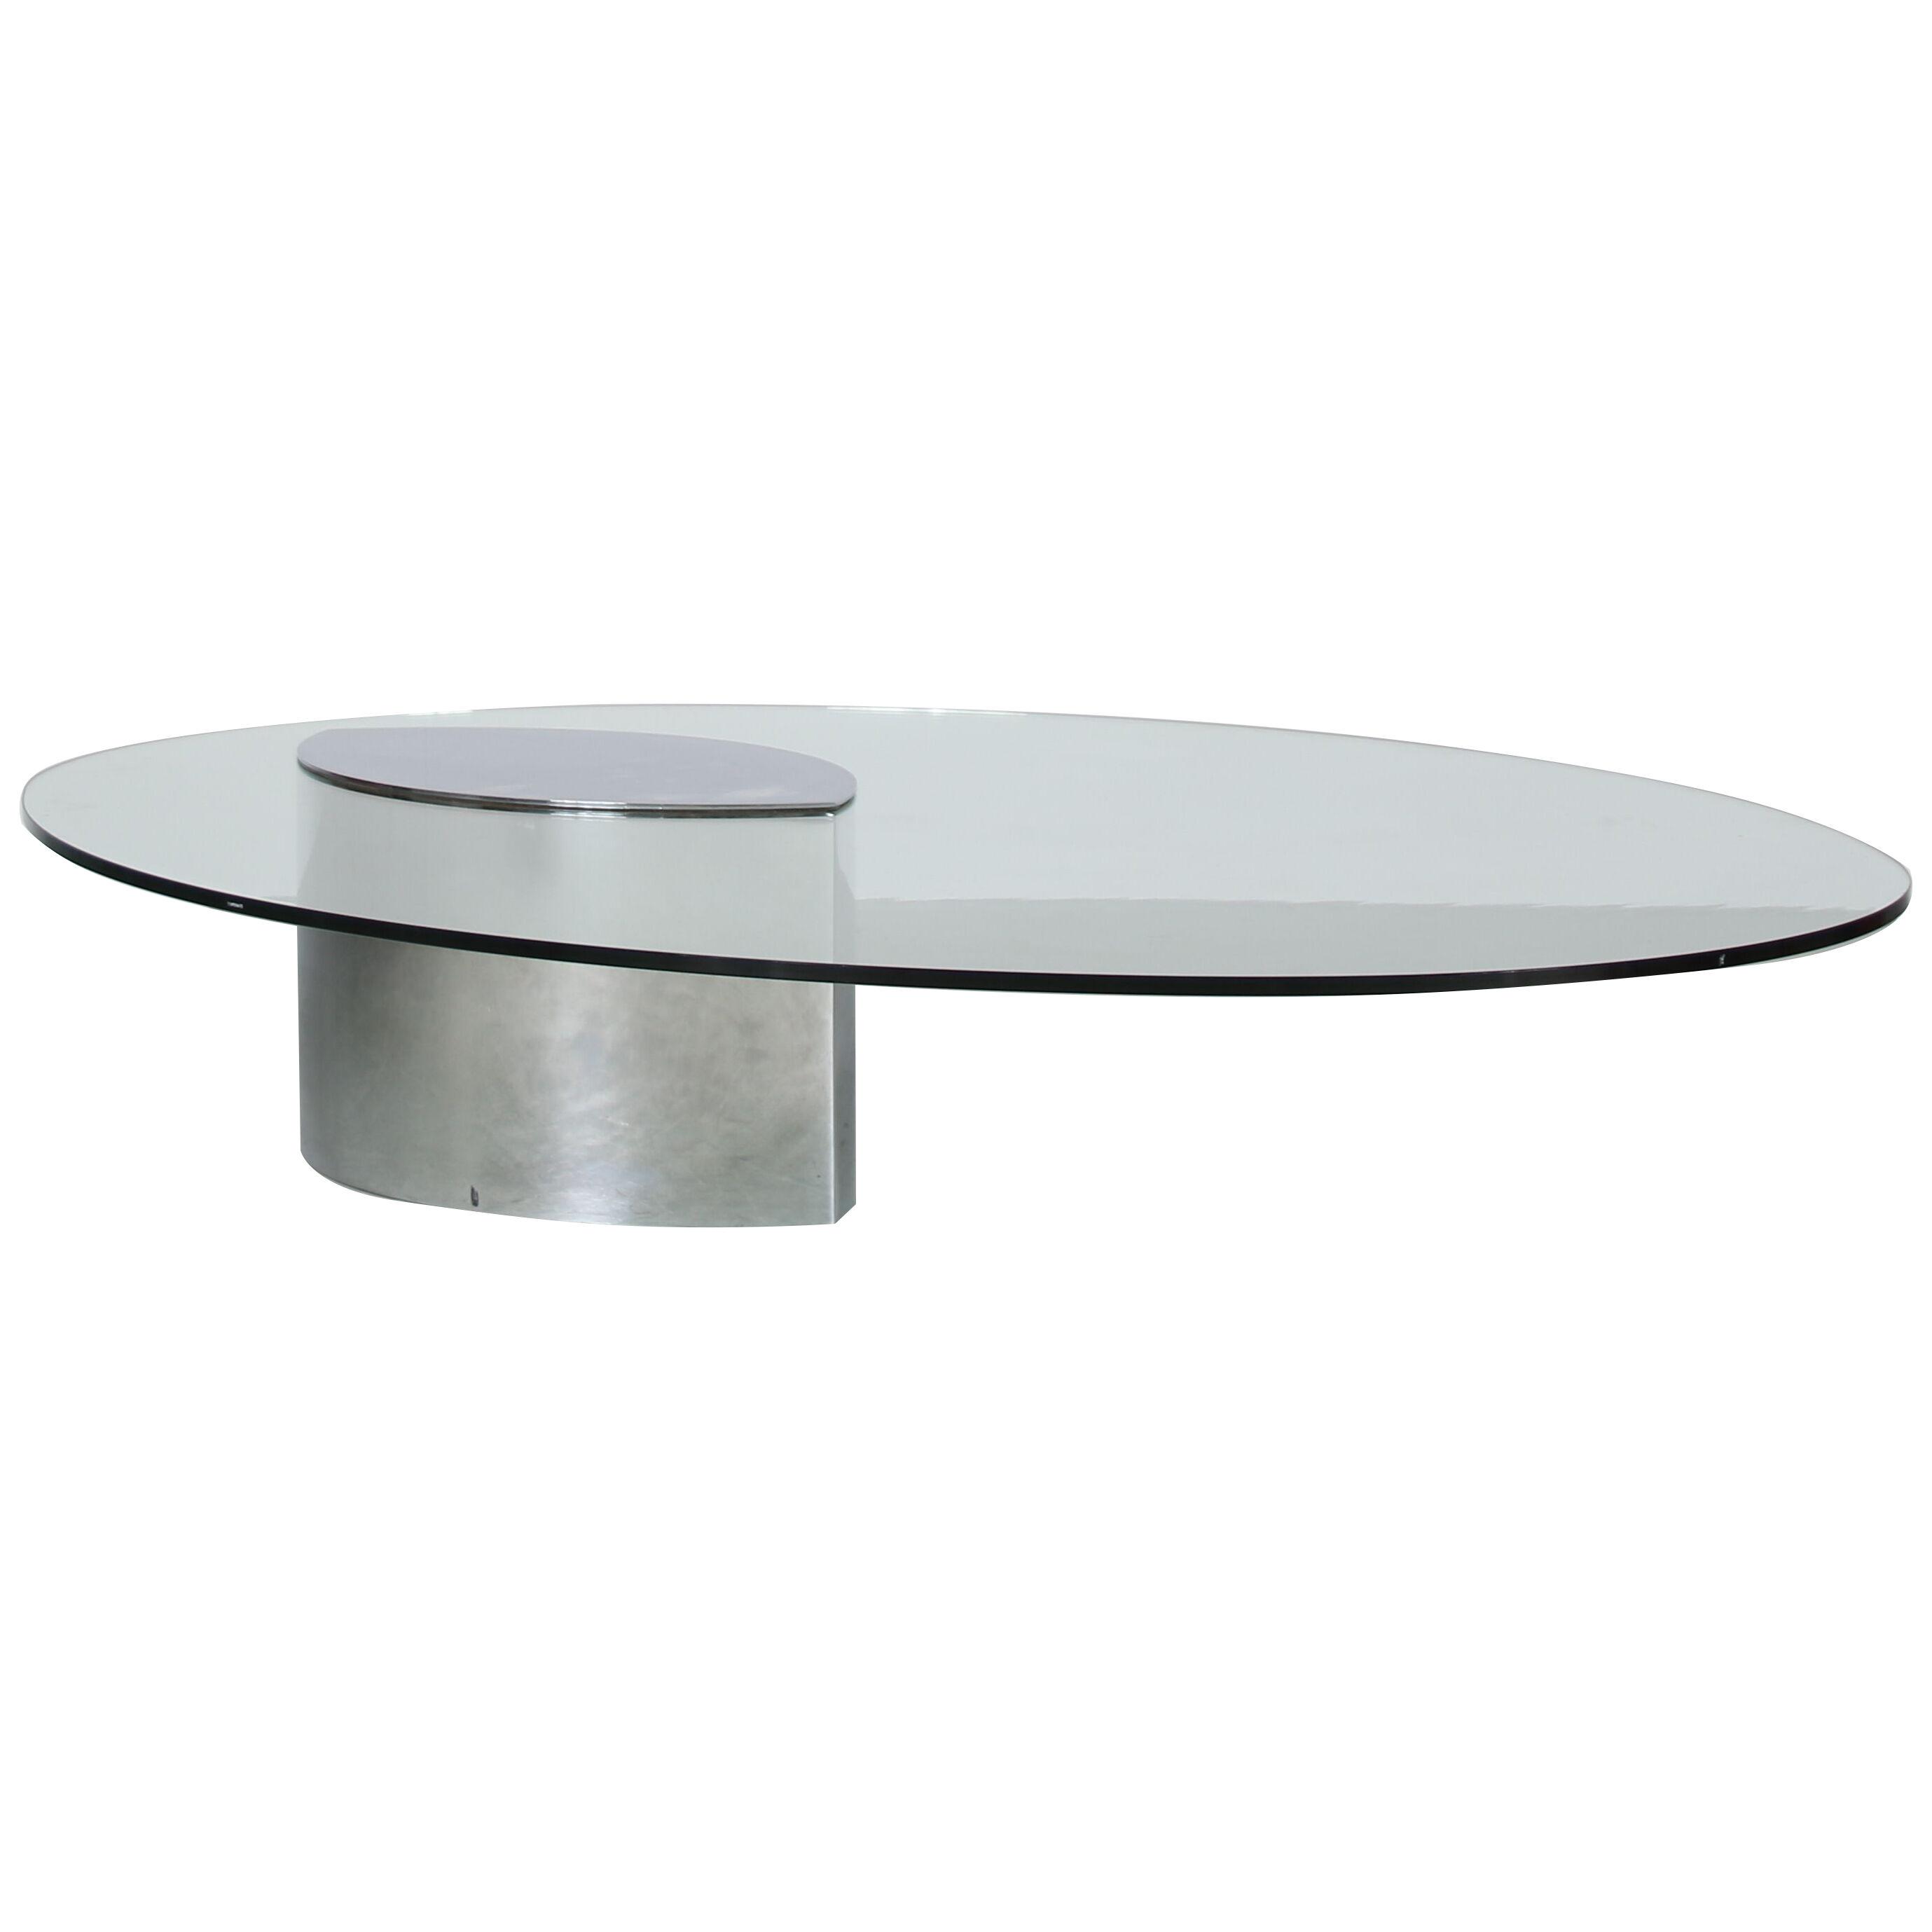 Cini Boeri “Lunario” Coffee Table for Knoll International, USA